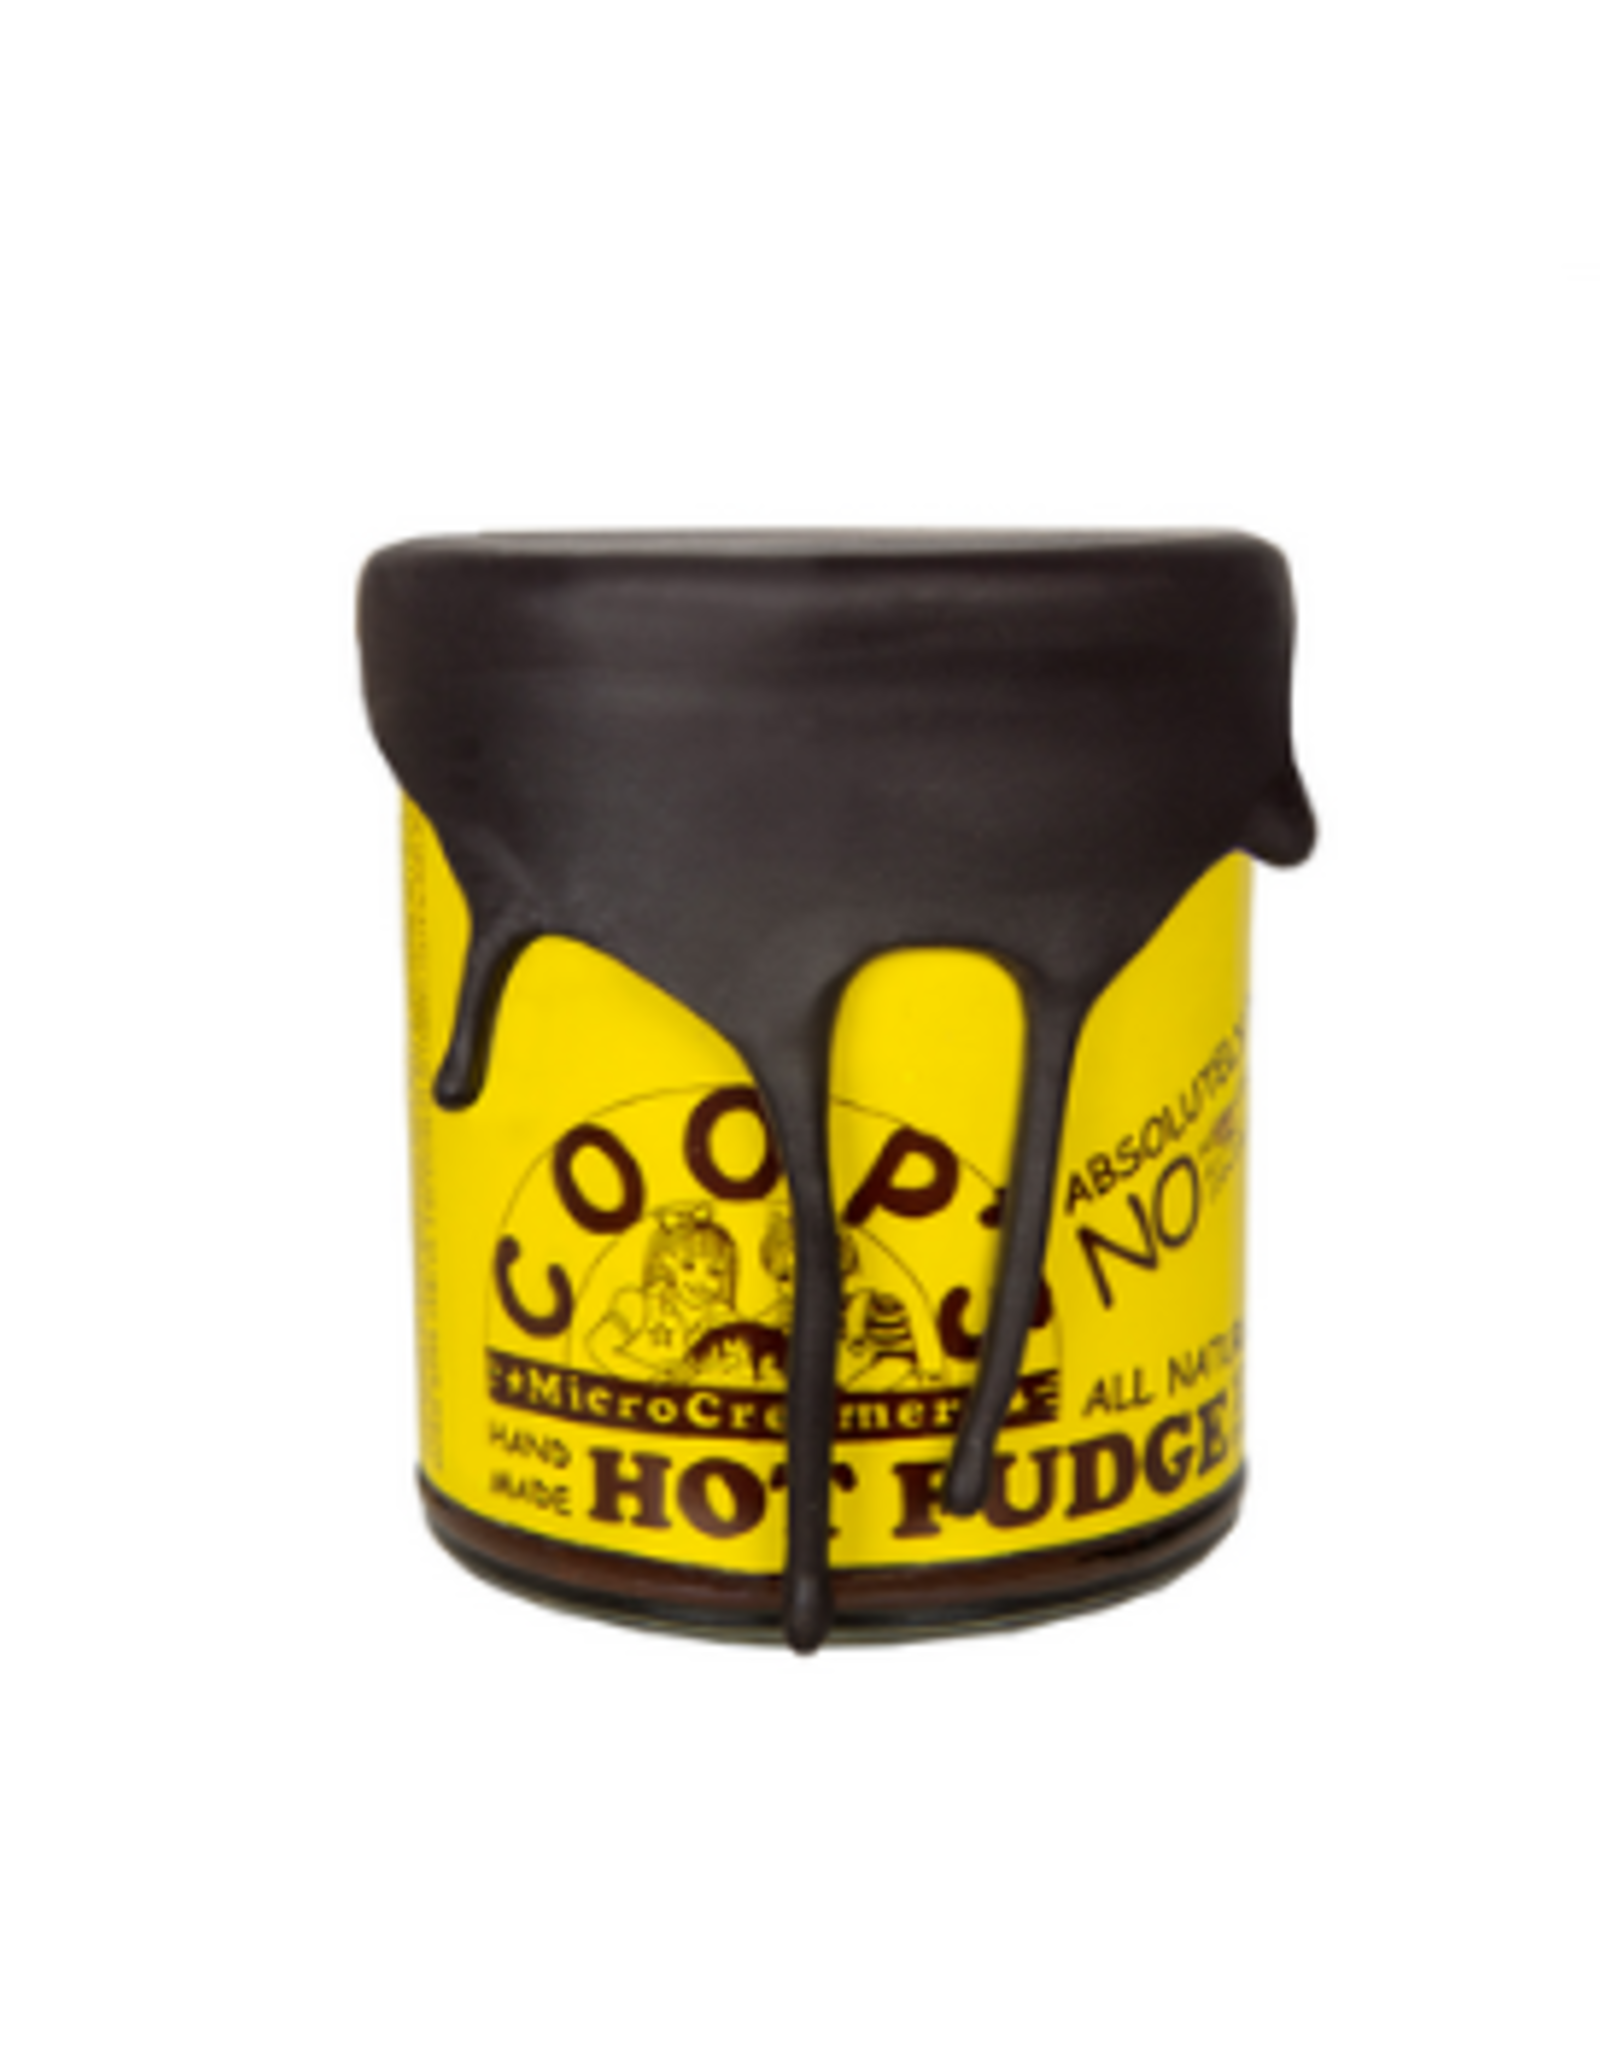 Coop's MicroCreamery Coop's Original Hot Fudge